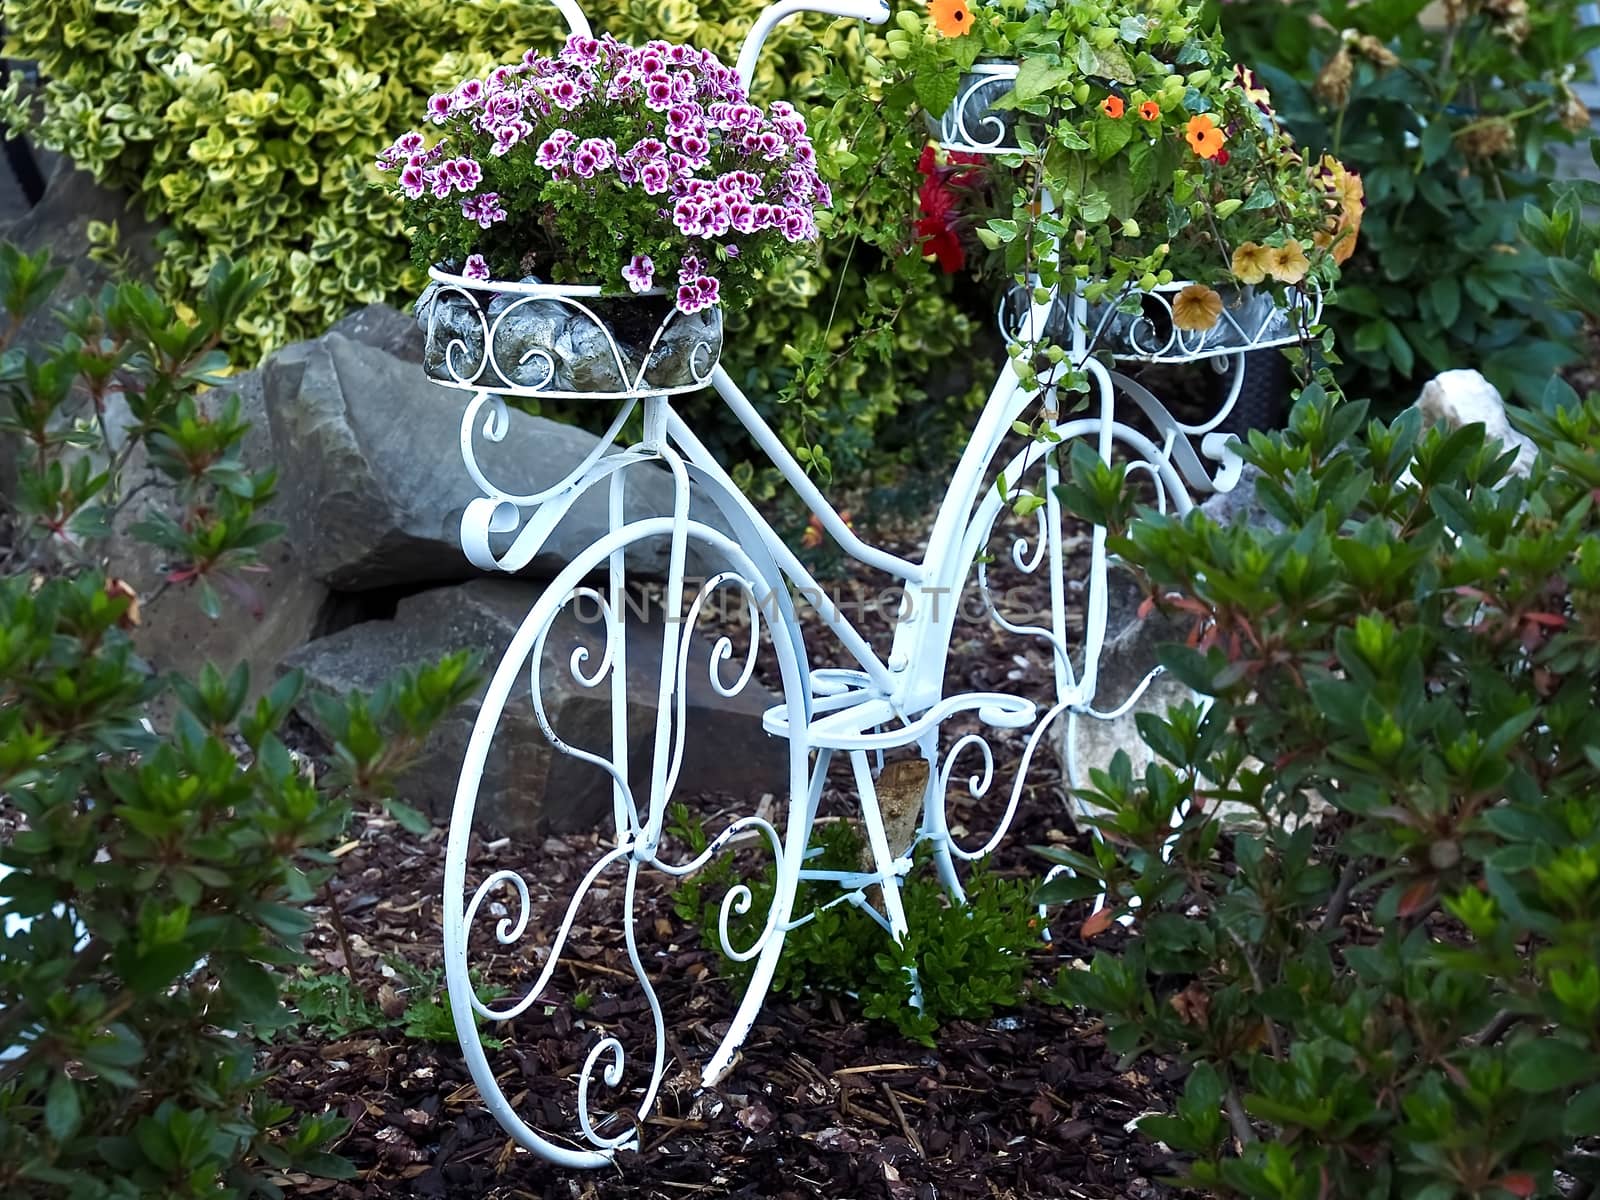 Decorative white bicycle with flowers in a garden by Stimmungsbilder